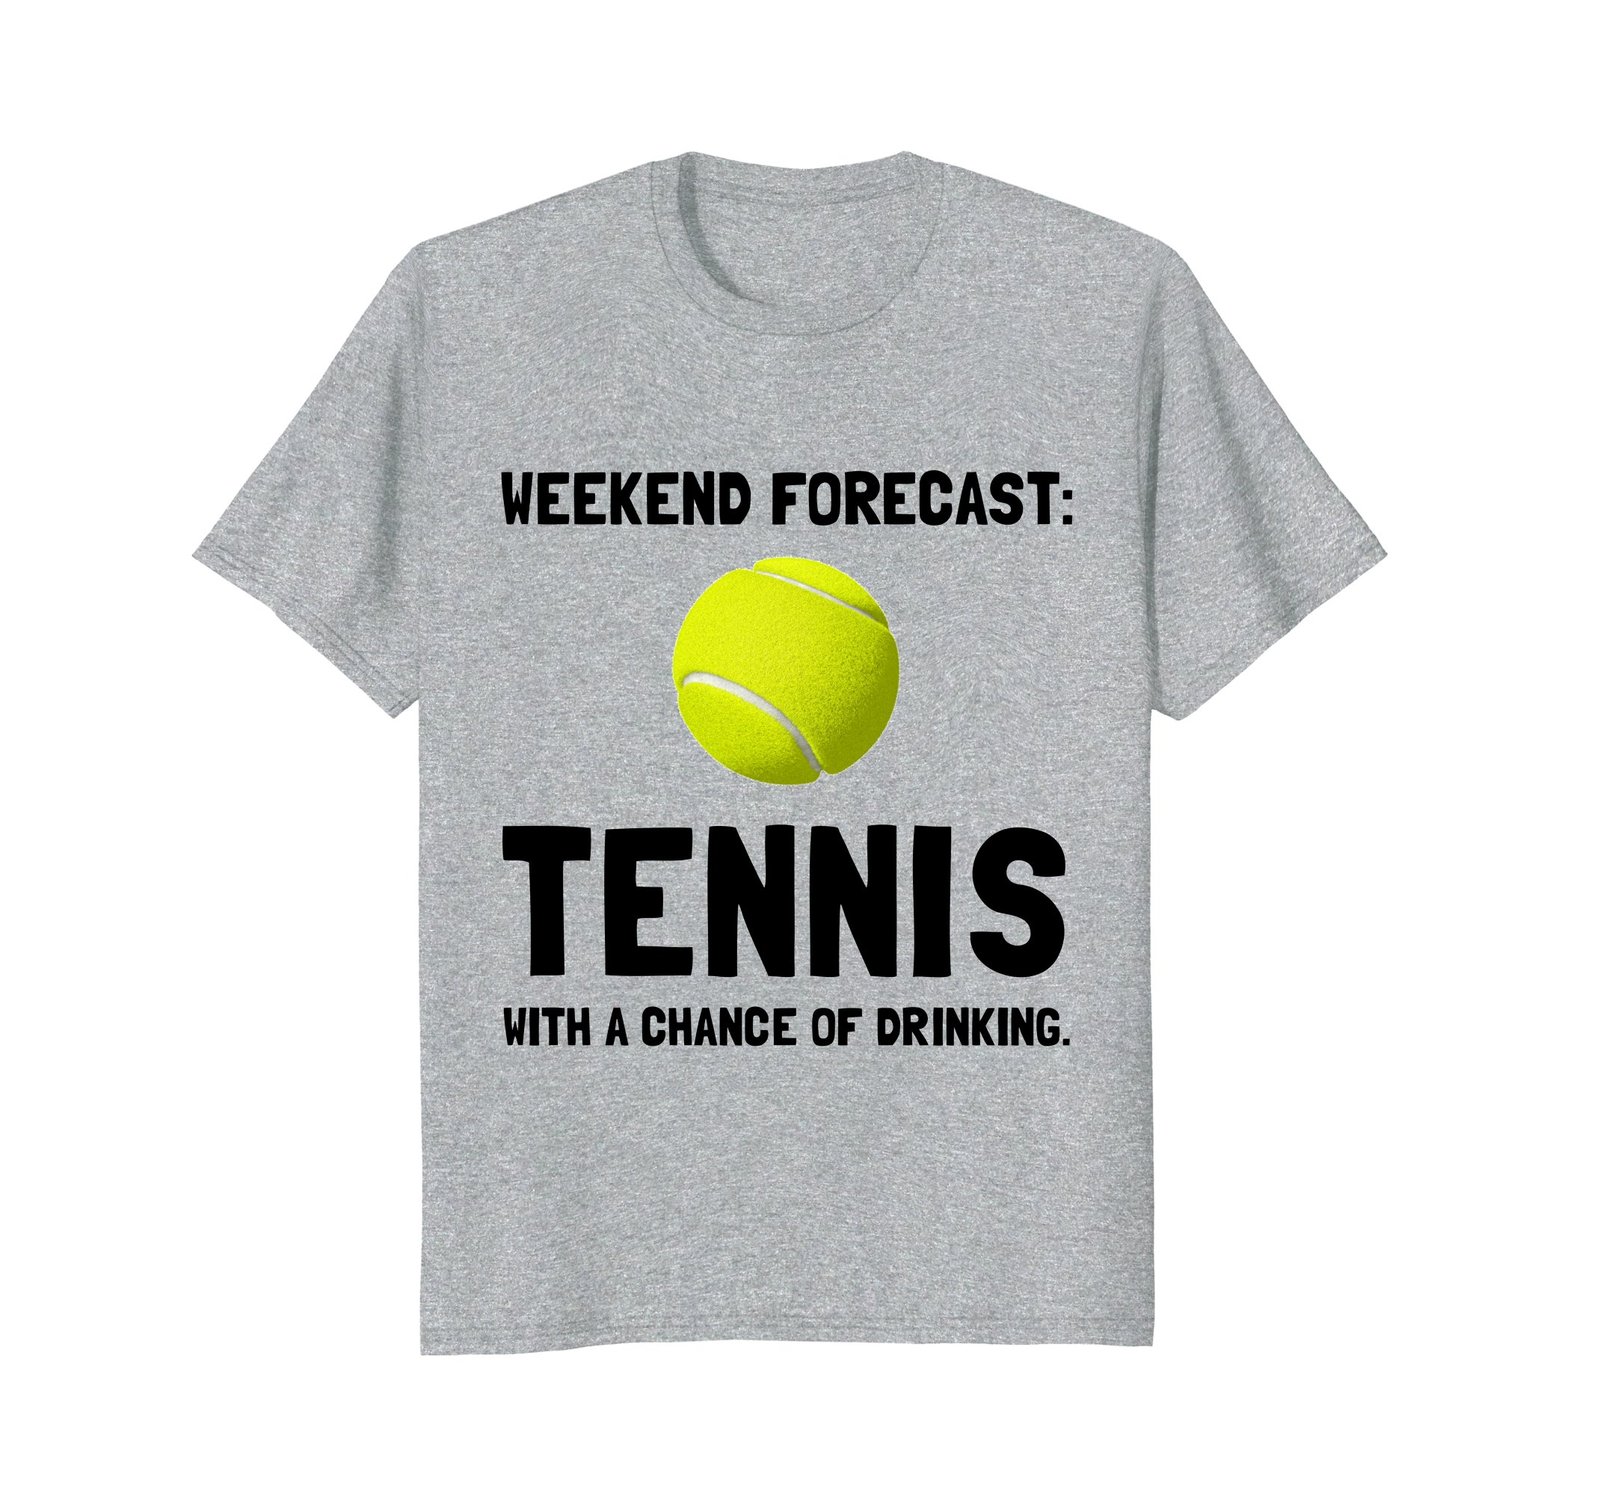 Funny Shirts - Weekend Forecast Tennis Funny Sports T-Shirt Men - T-Shirts